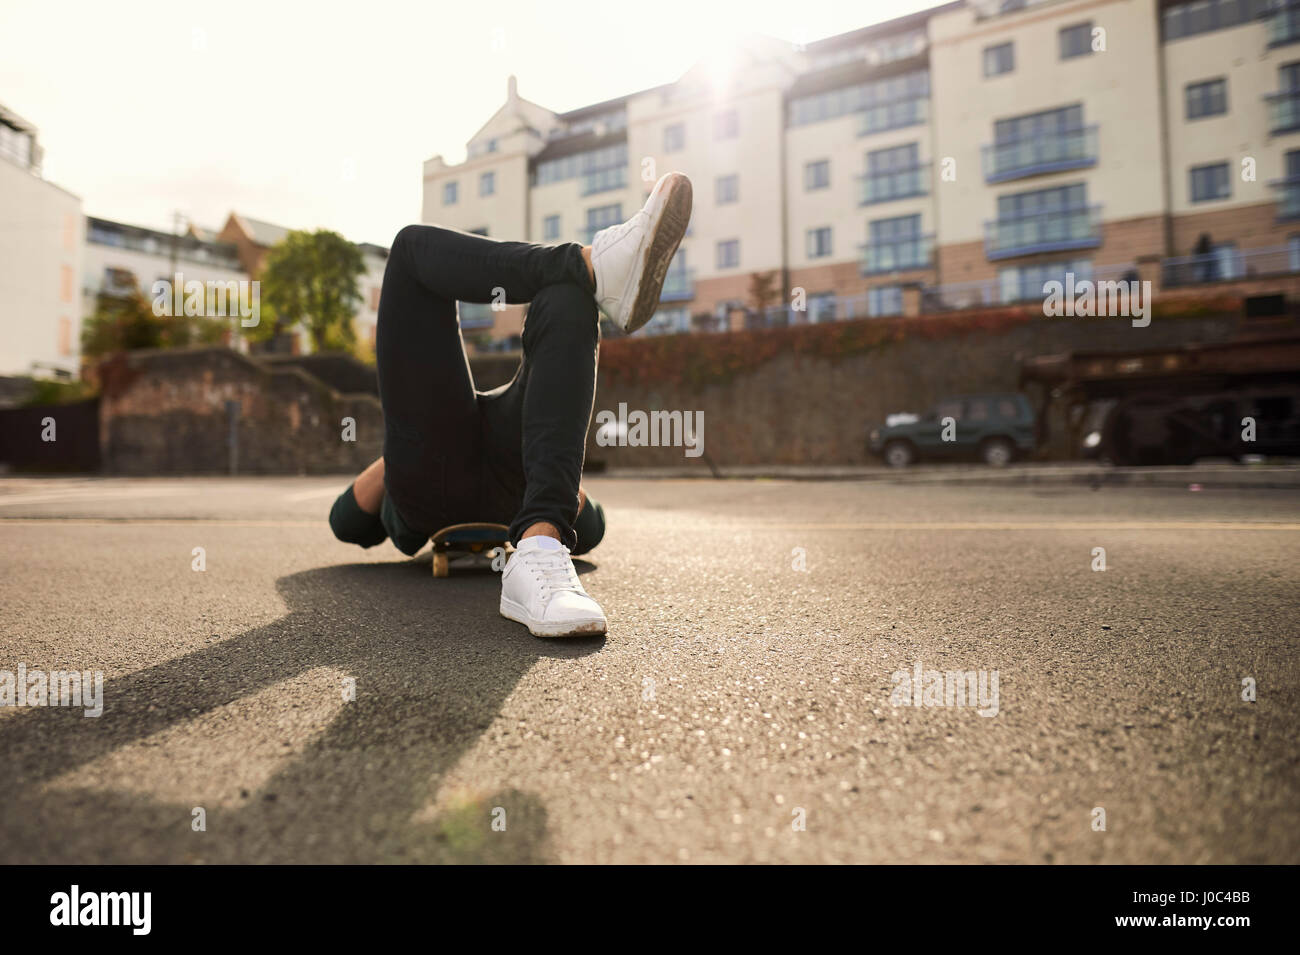 Young man laying on skateboard, relaxing, Bristol, UK Stock Photo